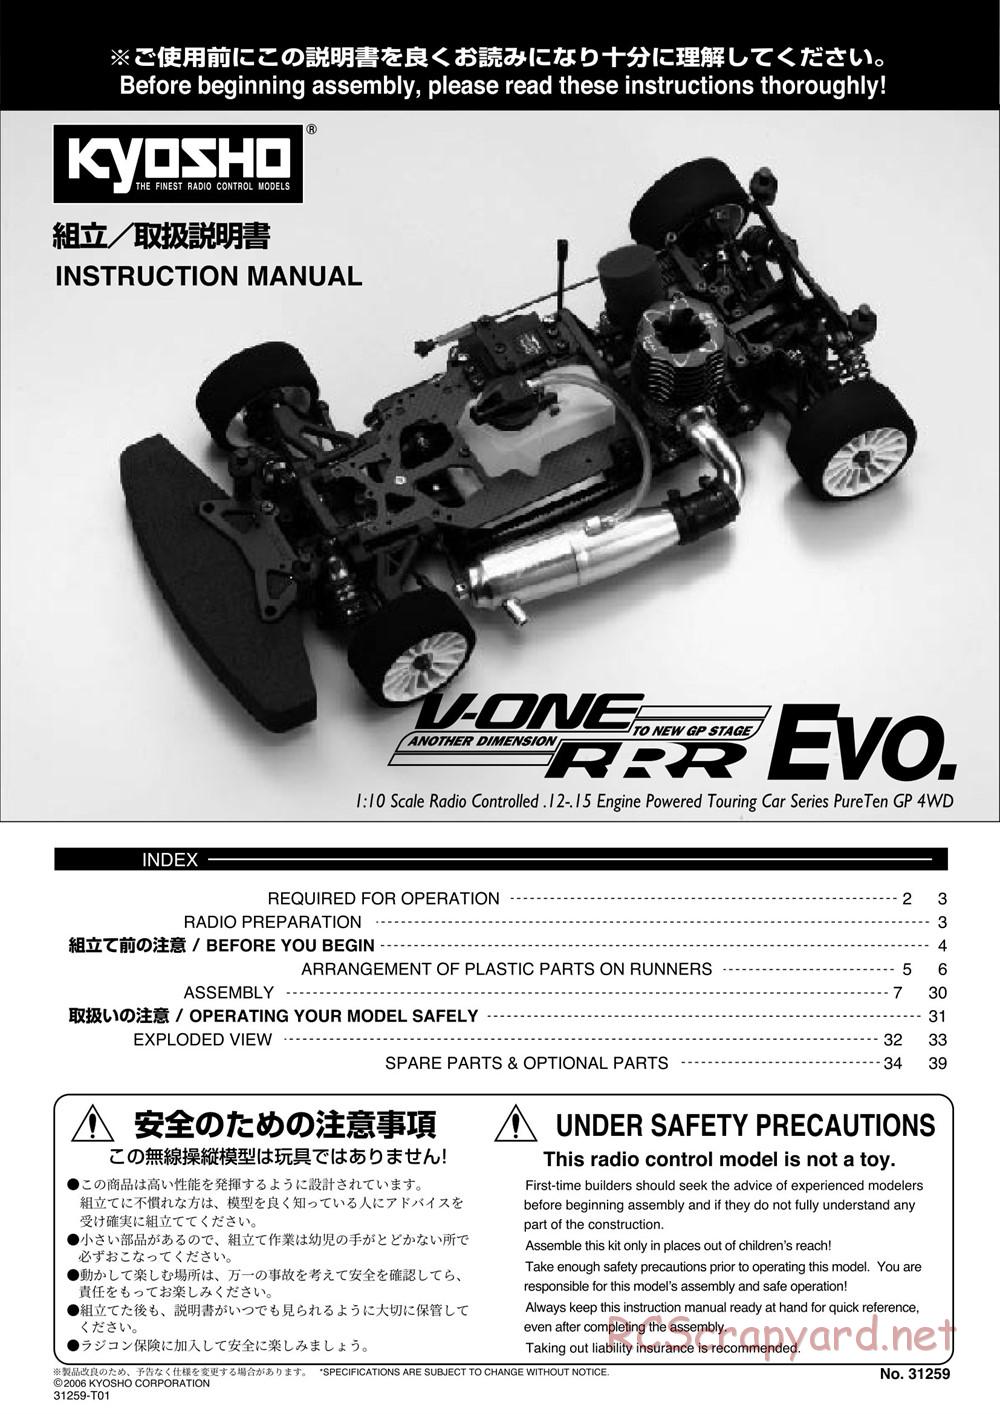 Kyosho - V-One RRR Evo - Manual - Page 1